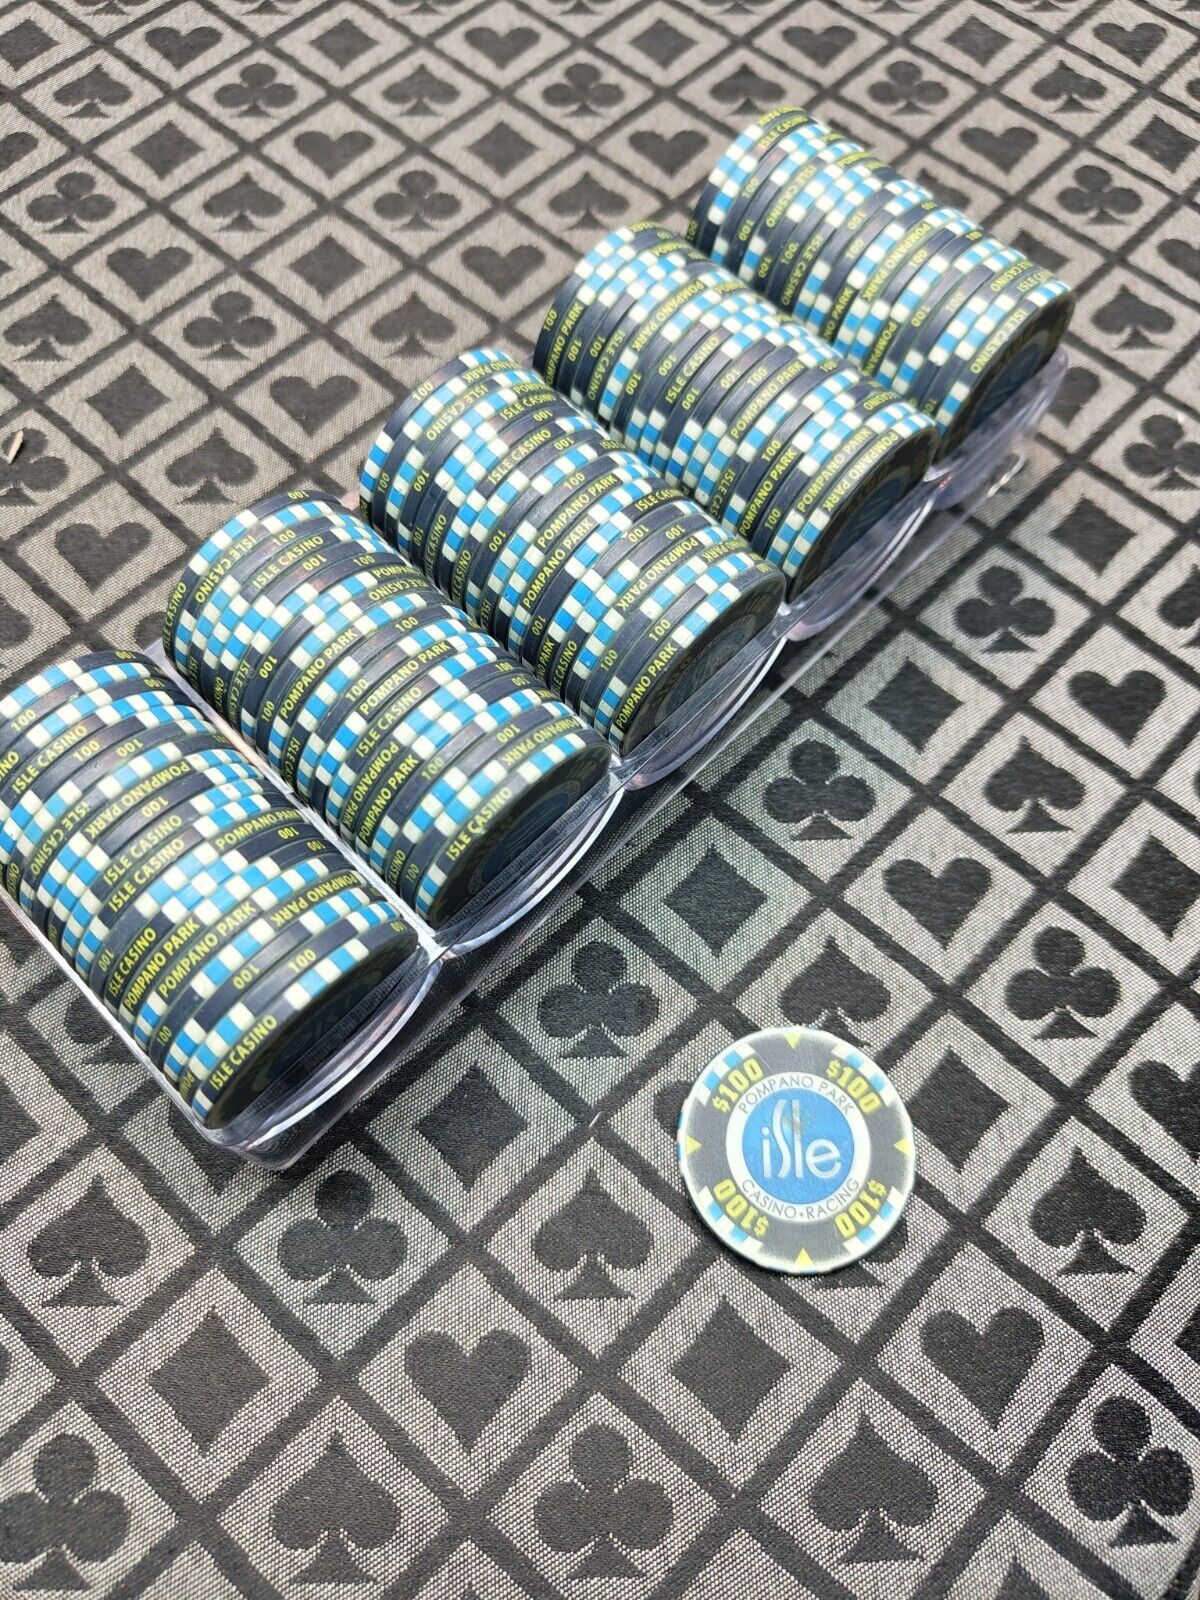 Isle Casino Chipco Rack Of Alt 100s - 100 Chips